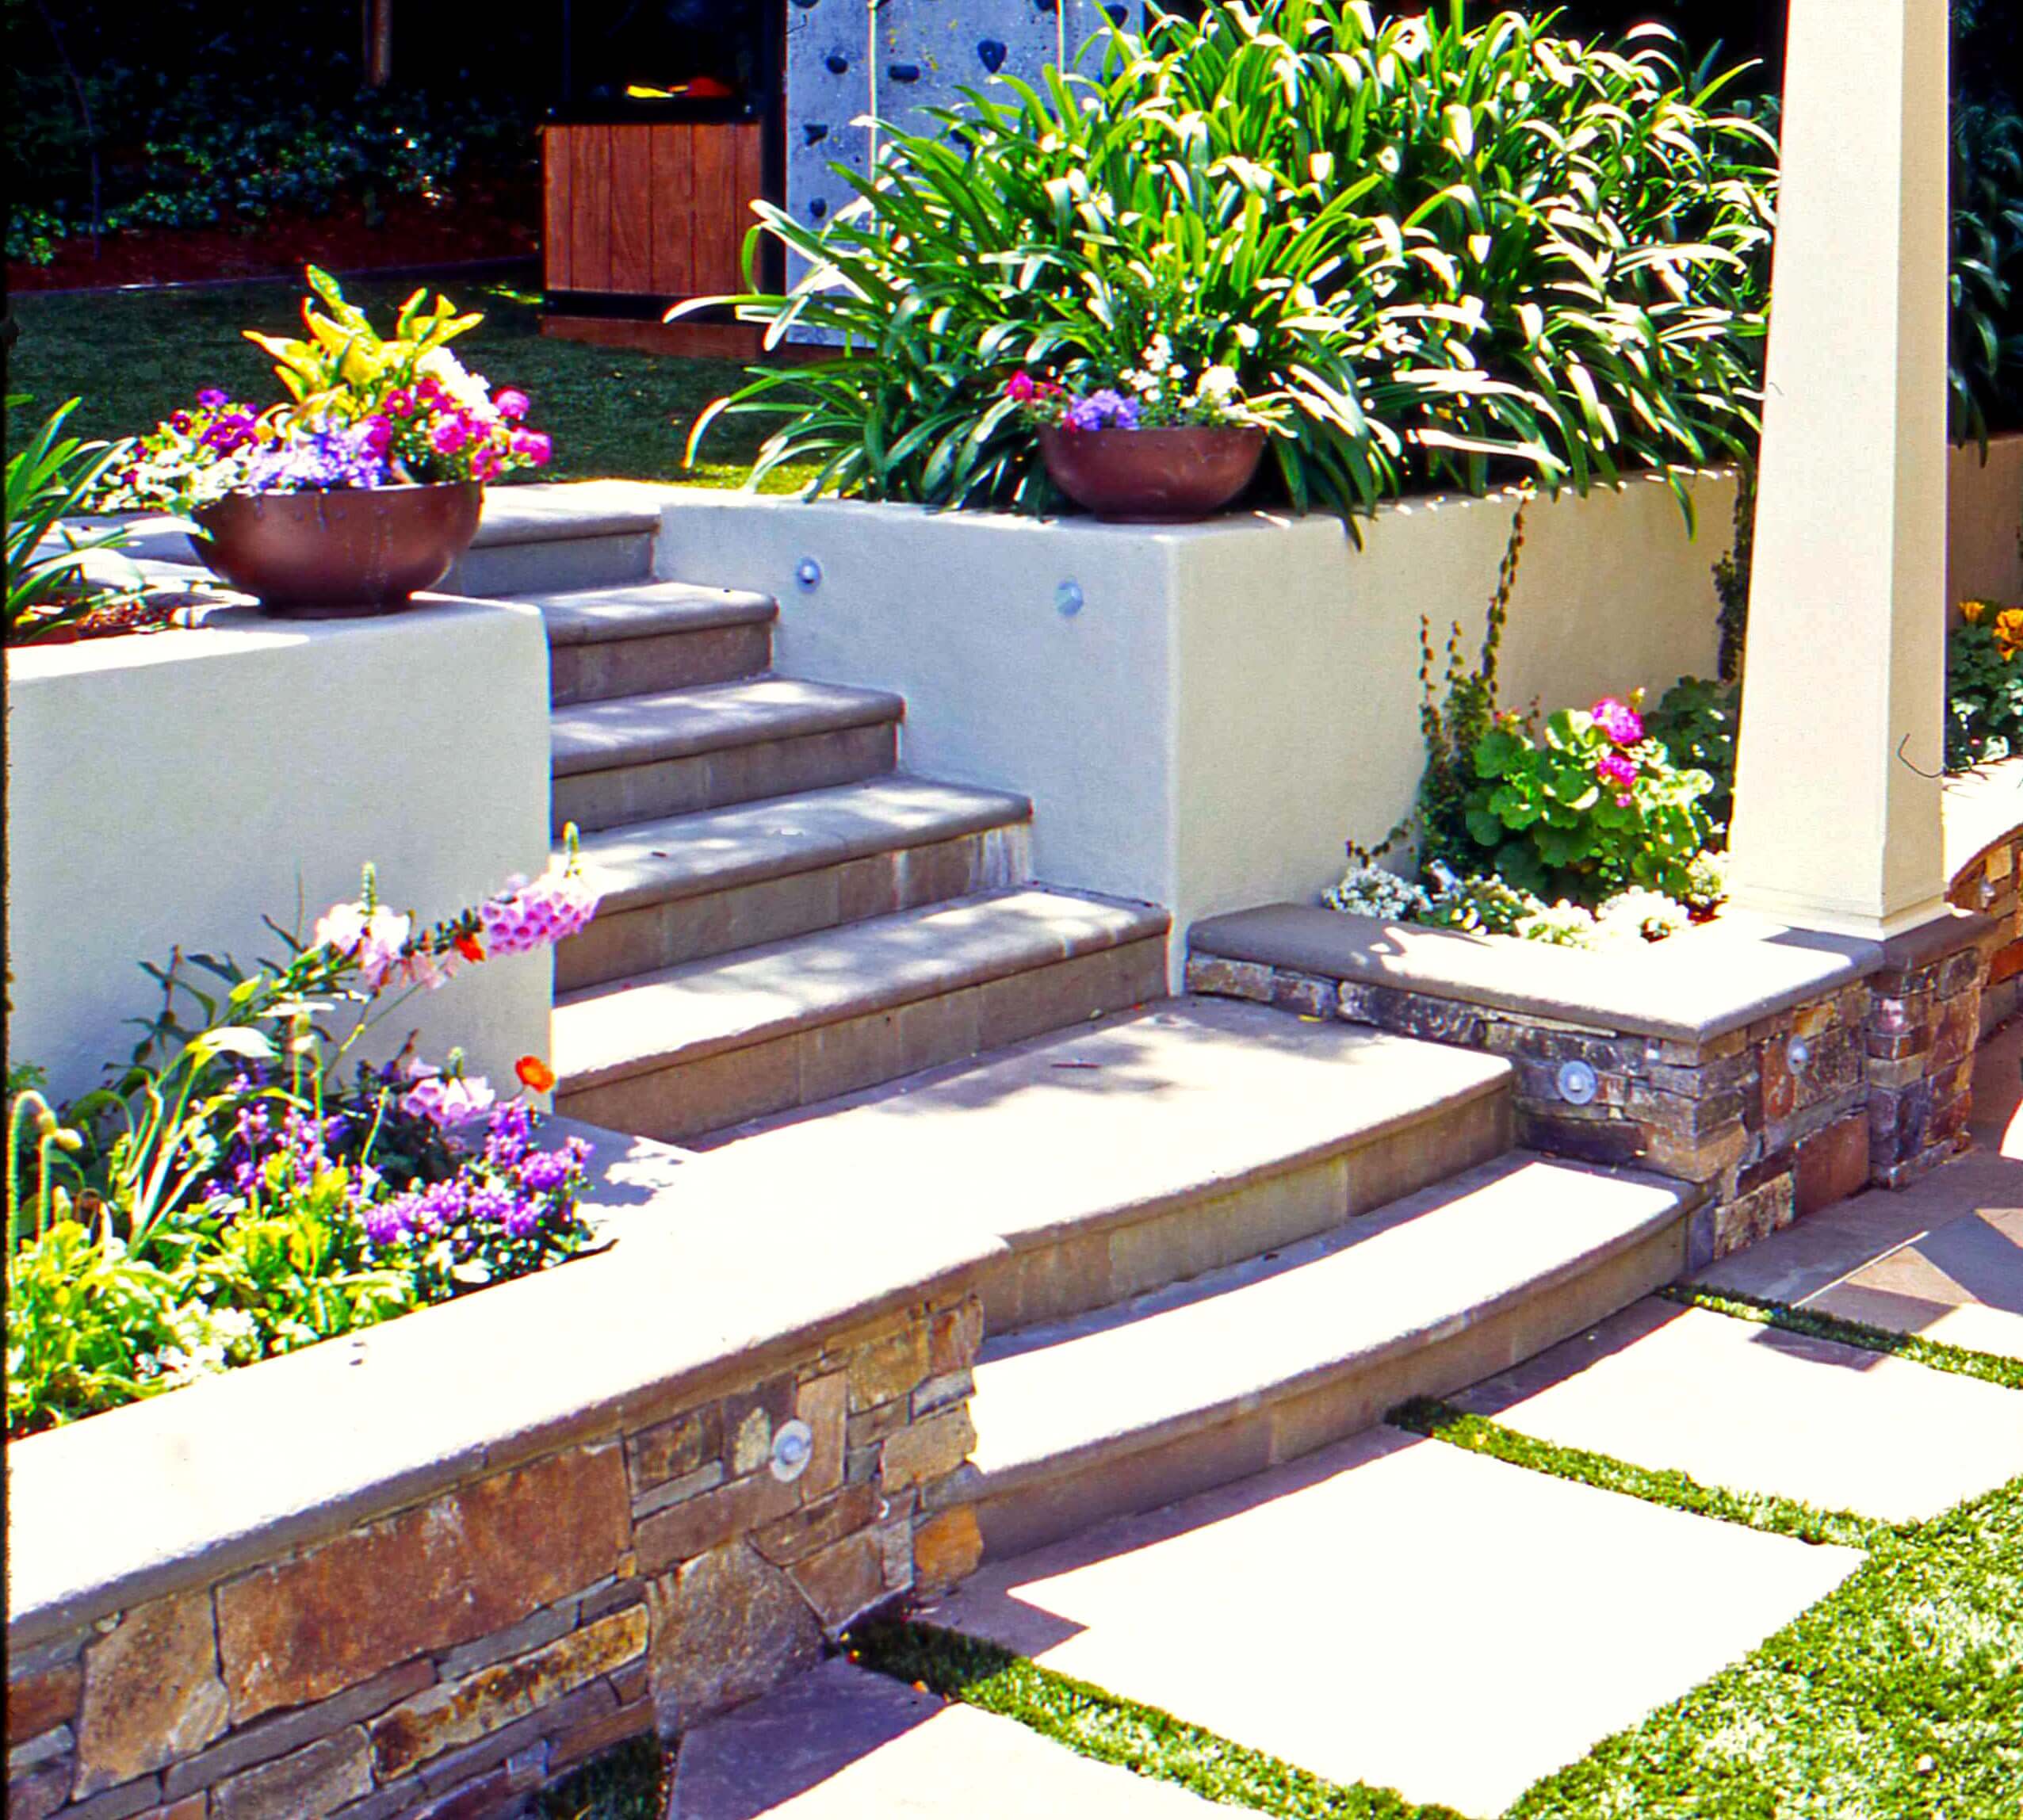 Stone steps leading from backyard to terraced lawn area in California backyard